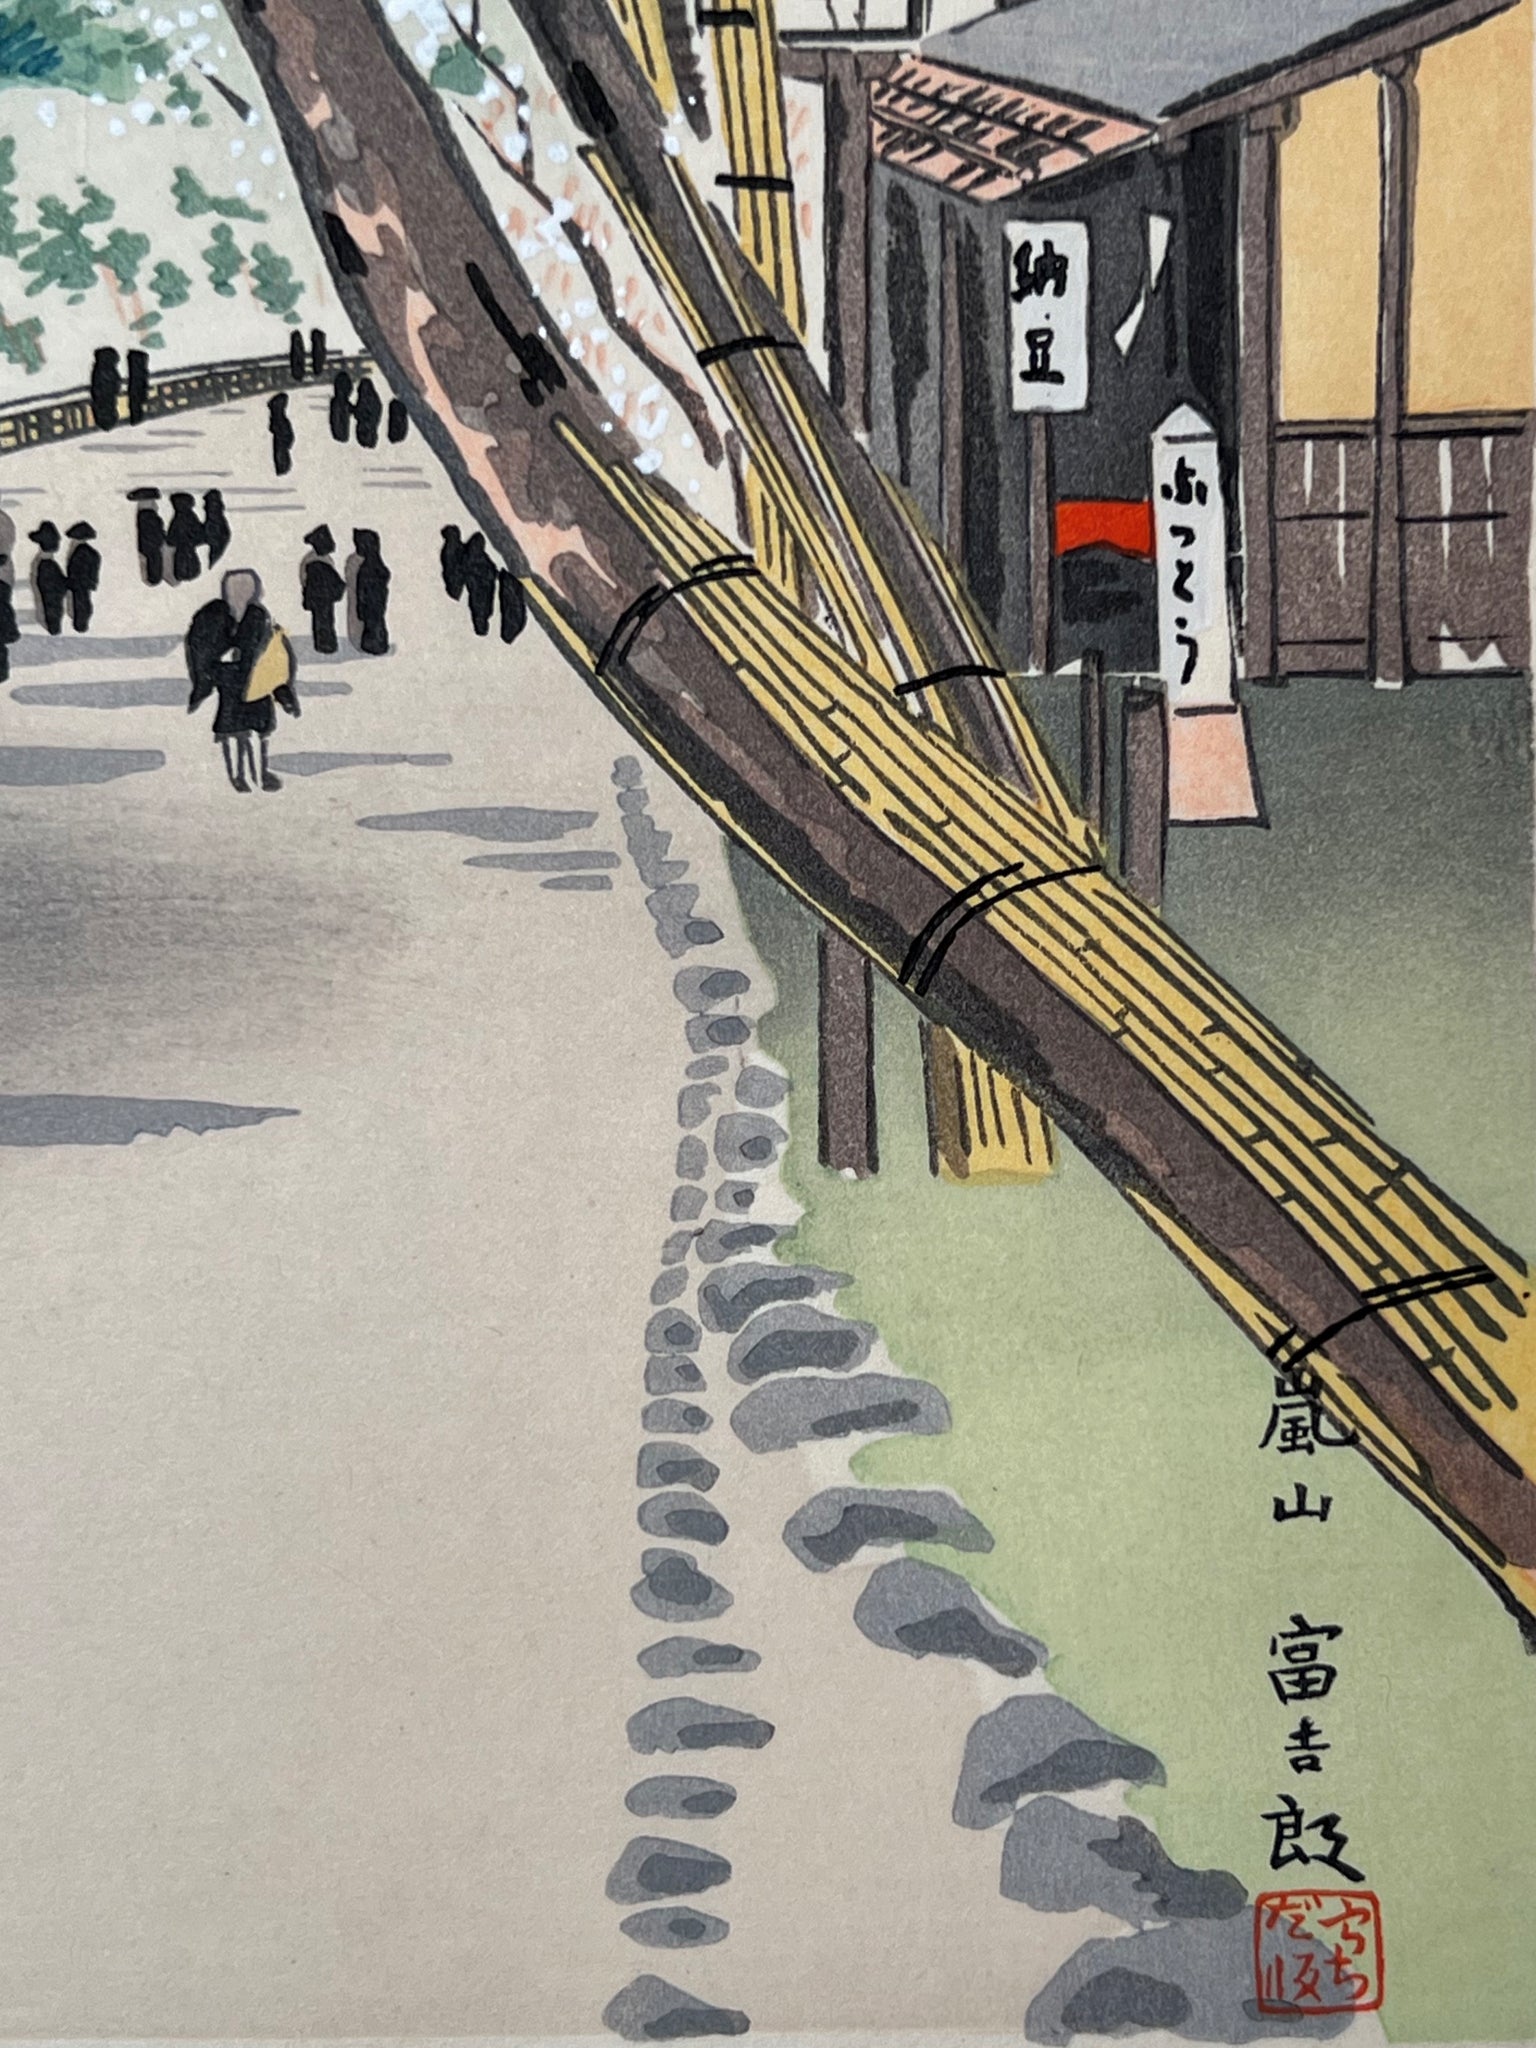 Estampe Japonaise de Tokuriki Tomikichiro | Série des 12 mois à Kyoto, avril, arashiyama, signature